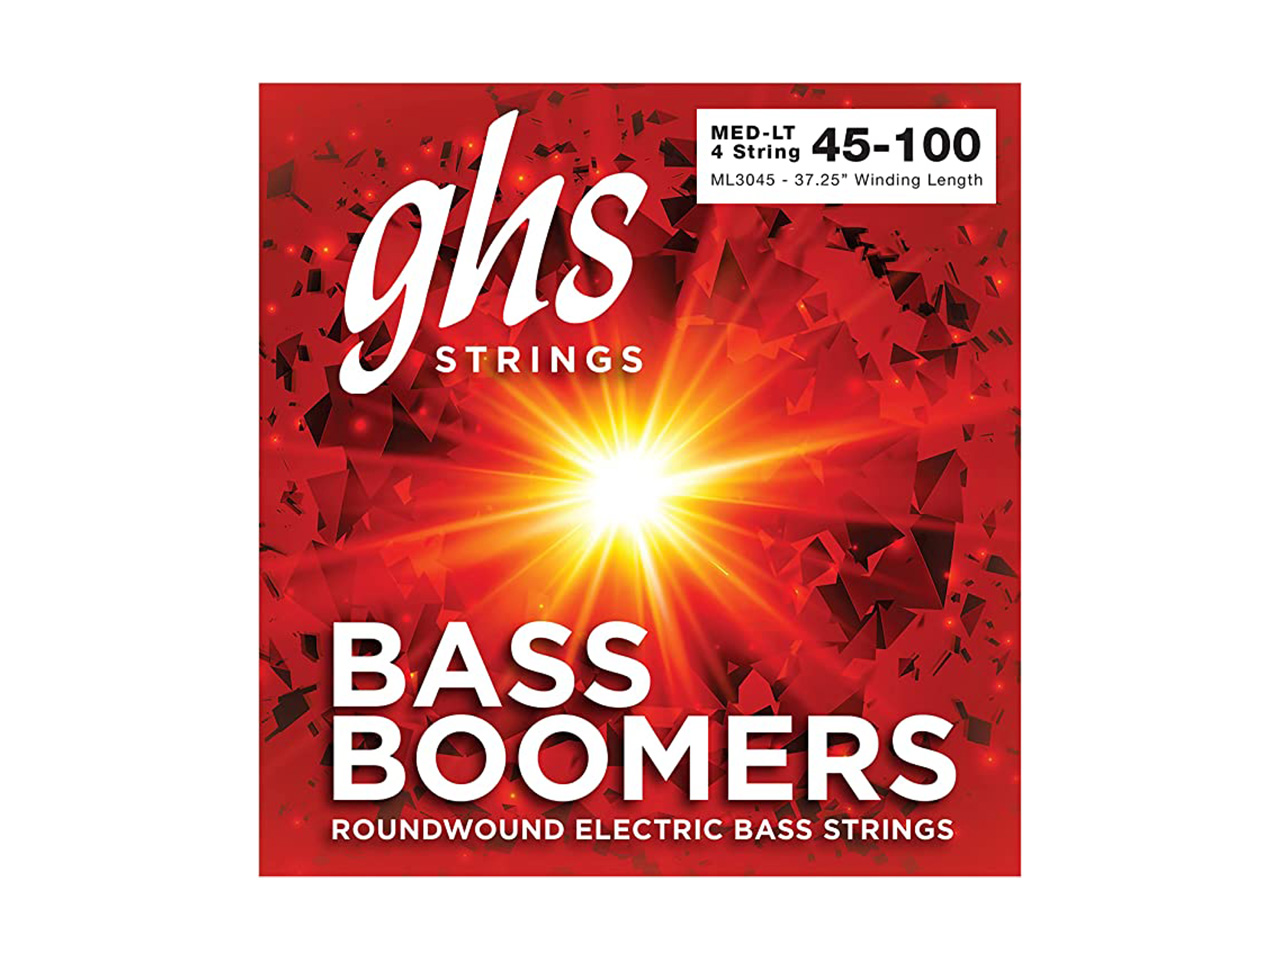 ghs(ジーエイチエス) Bass Boomers® Medium Light ML3045 / 45-100 (エレキベース弦/Long Scale)